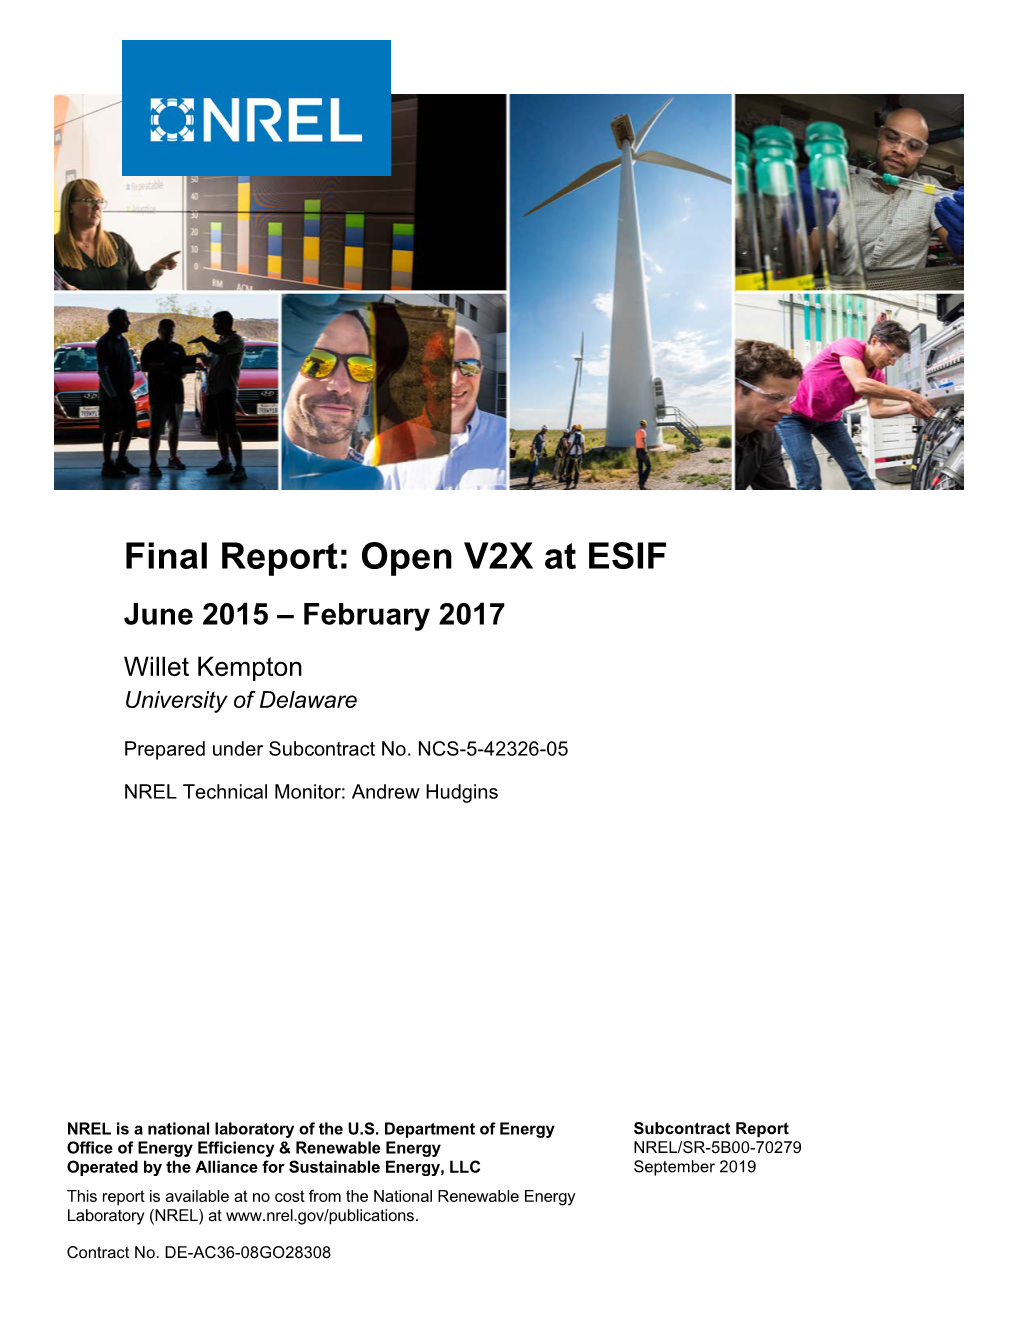 Final Report: Open V2X at ESIF: June 2015 – February 2017